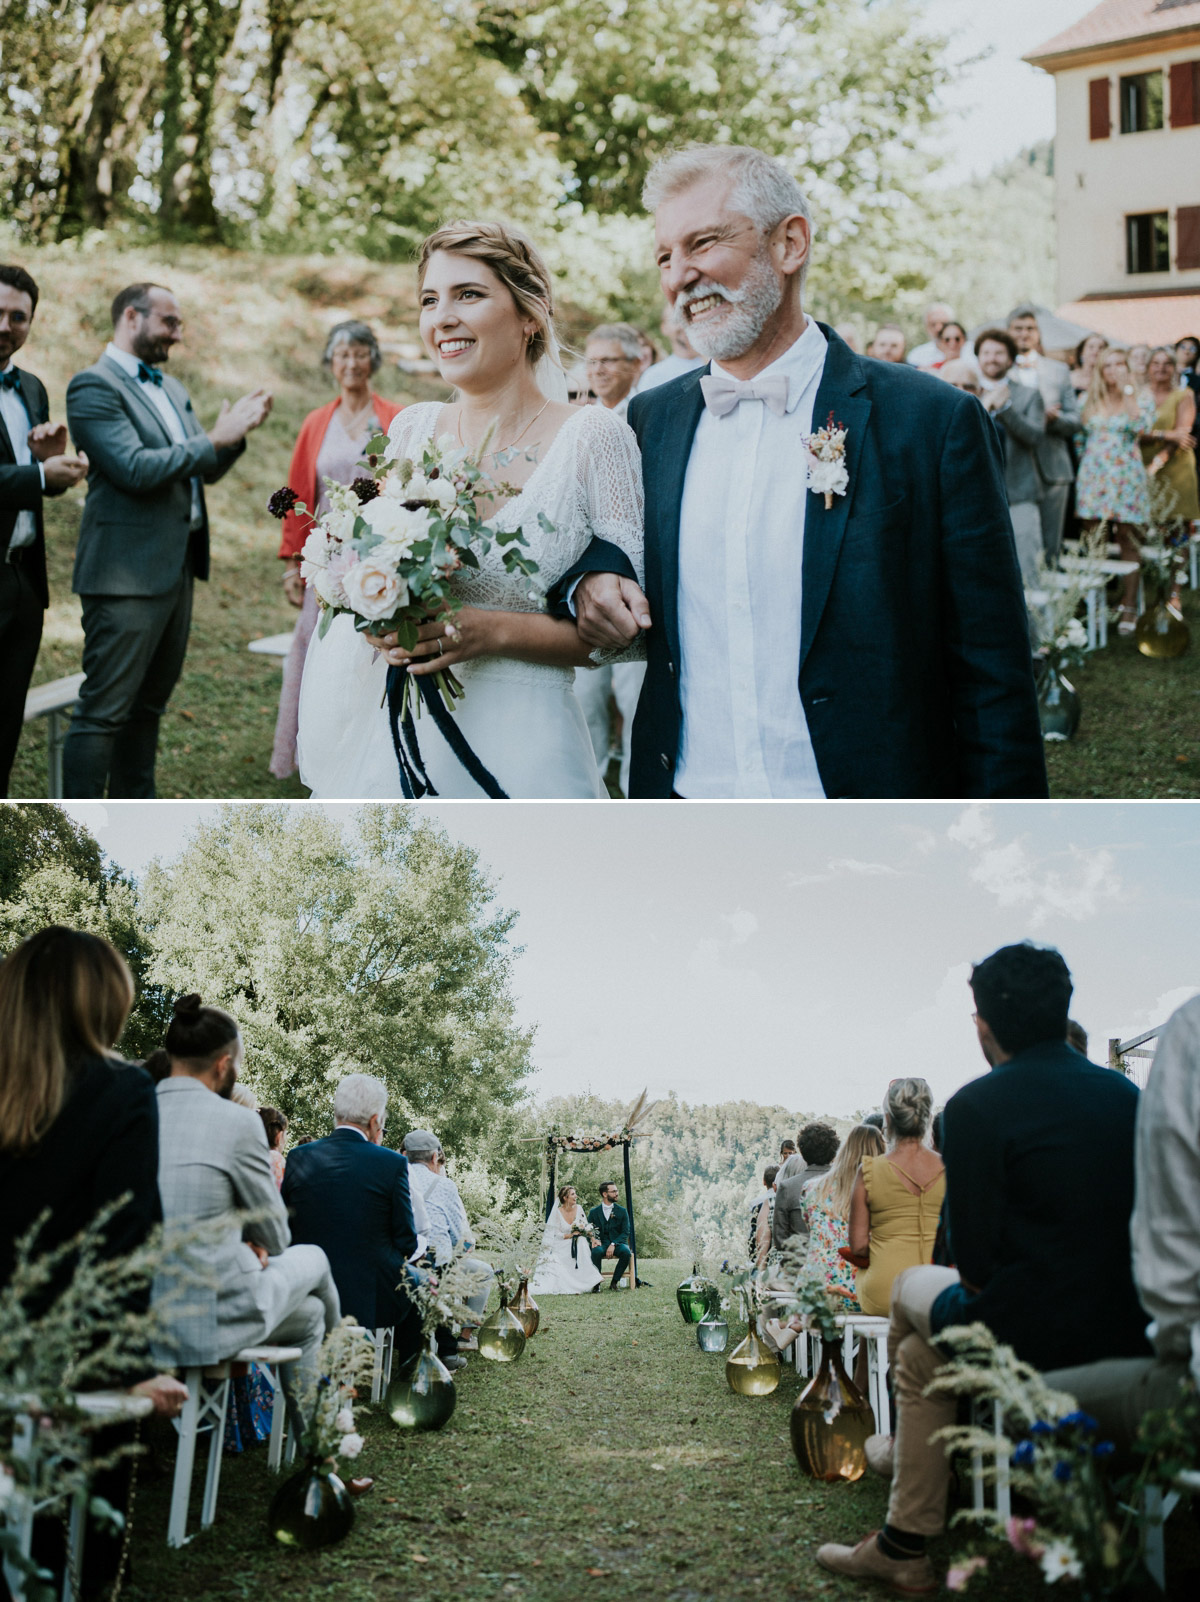 photographe mariage morimont oberlarg alsace suisse